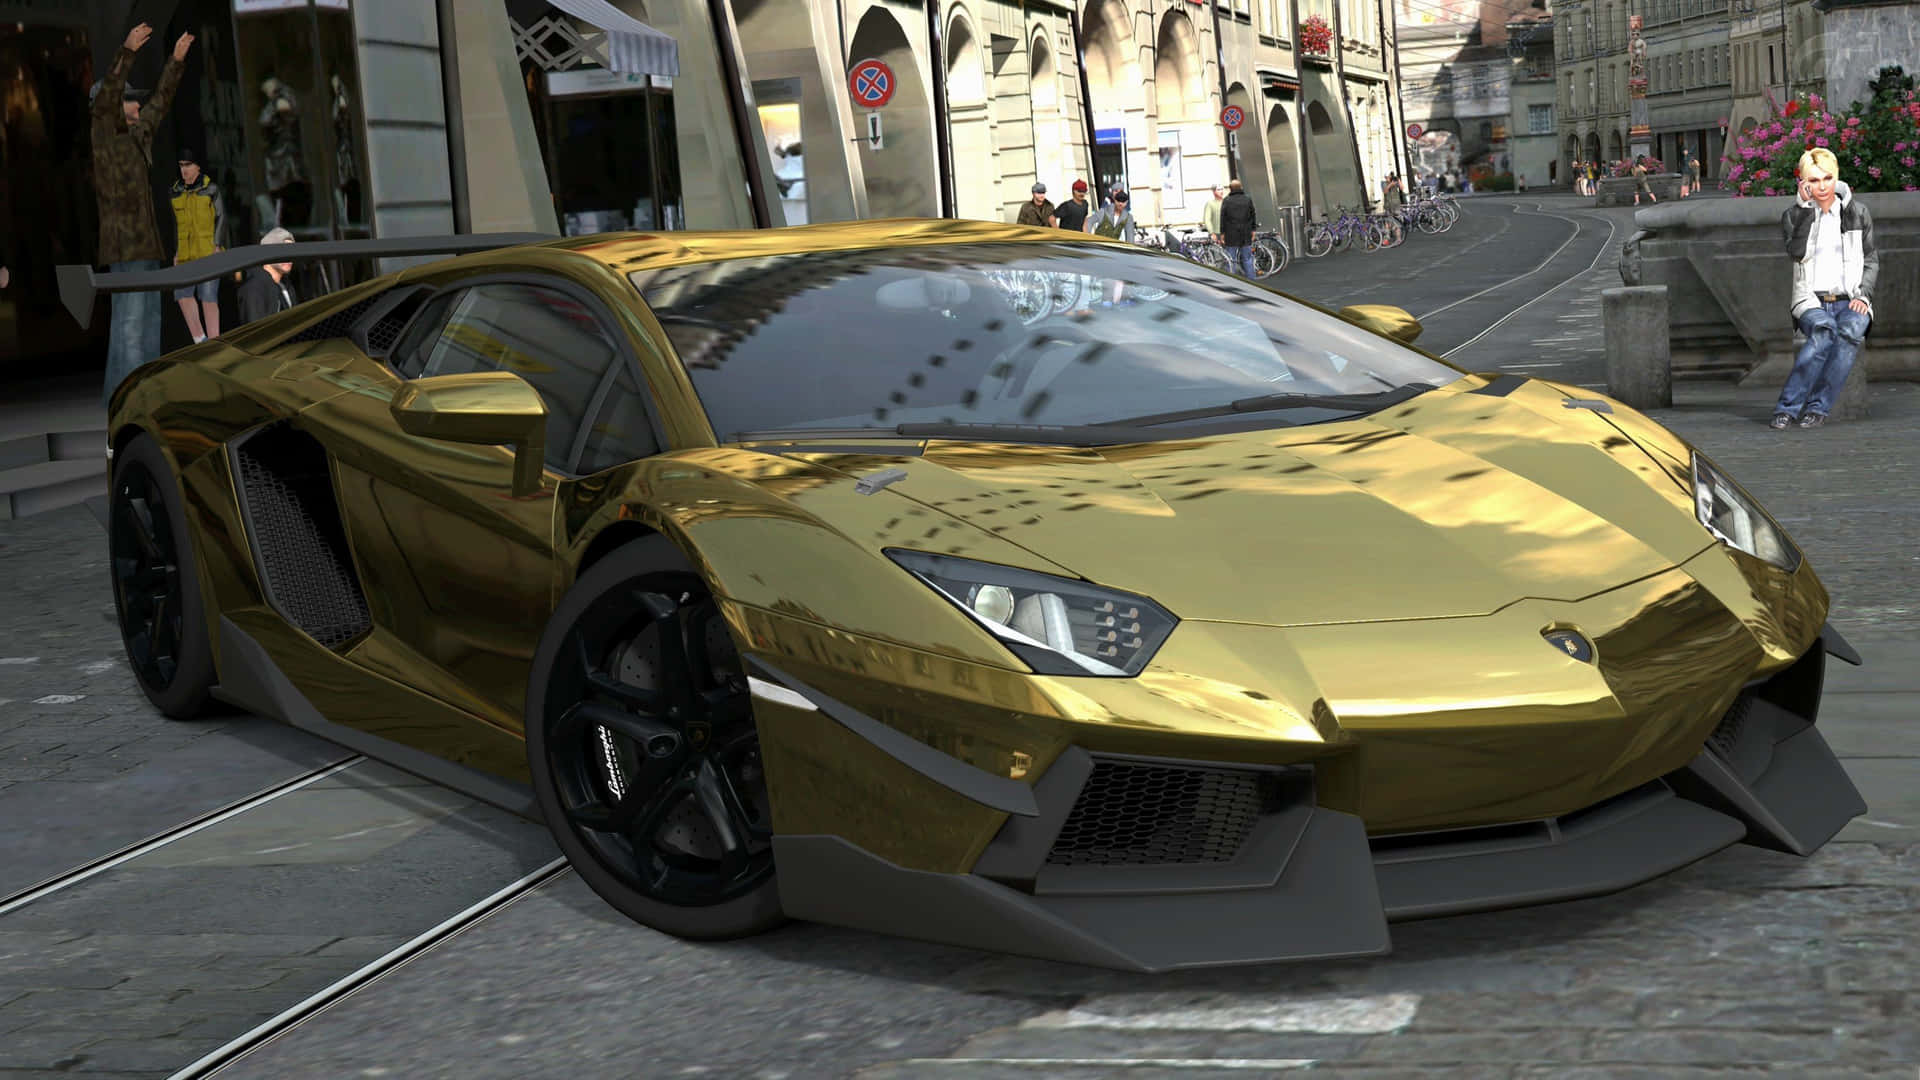 Stunning Gold Lamborghini Wallpaper